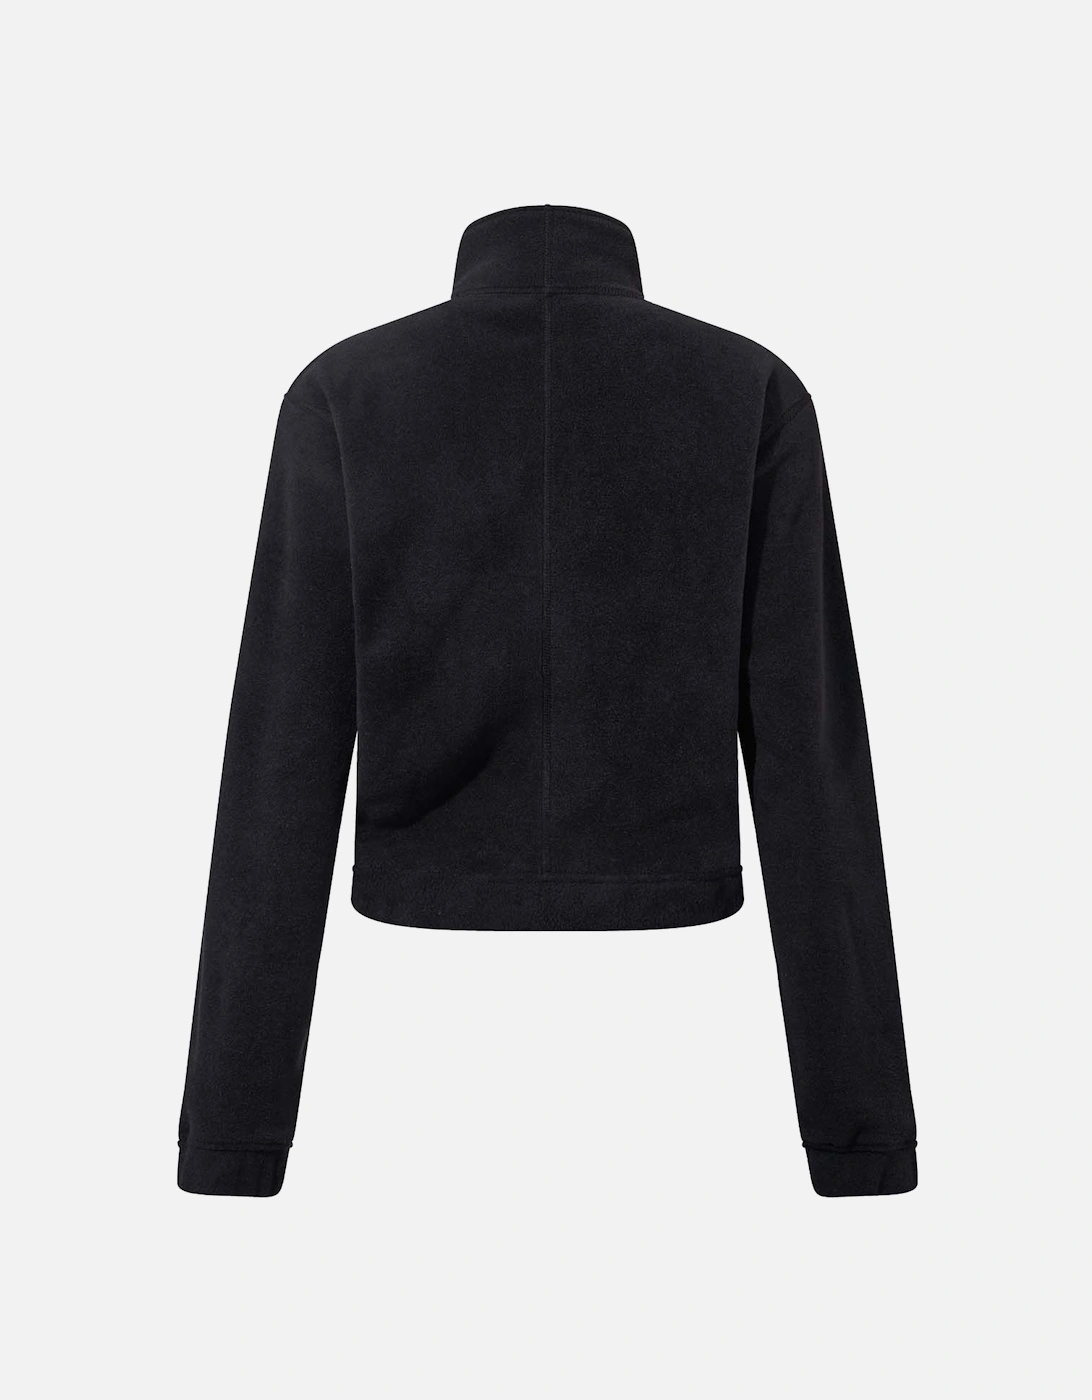 Womens Urban Cropped Co-Ord Fleece Jacket